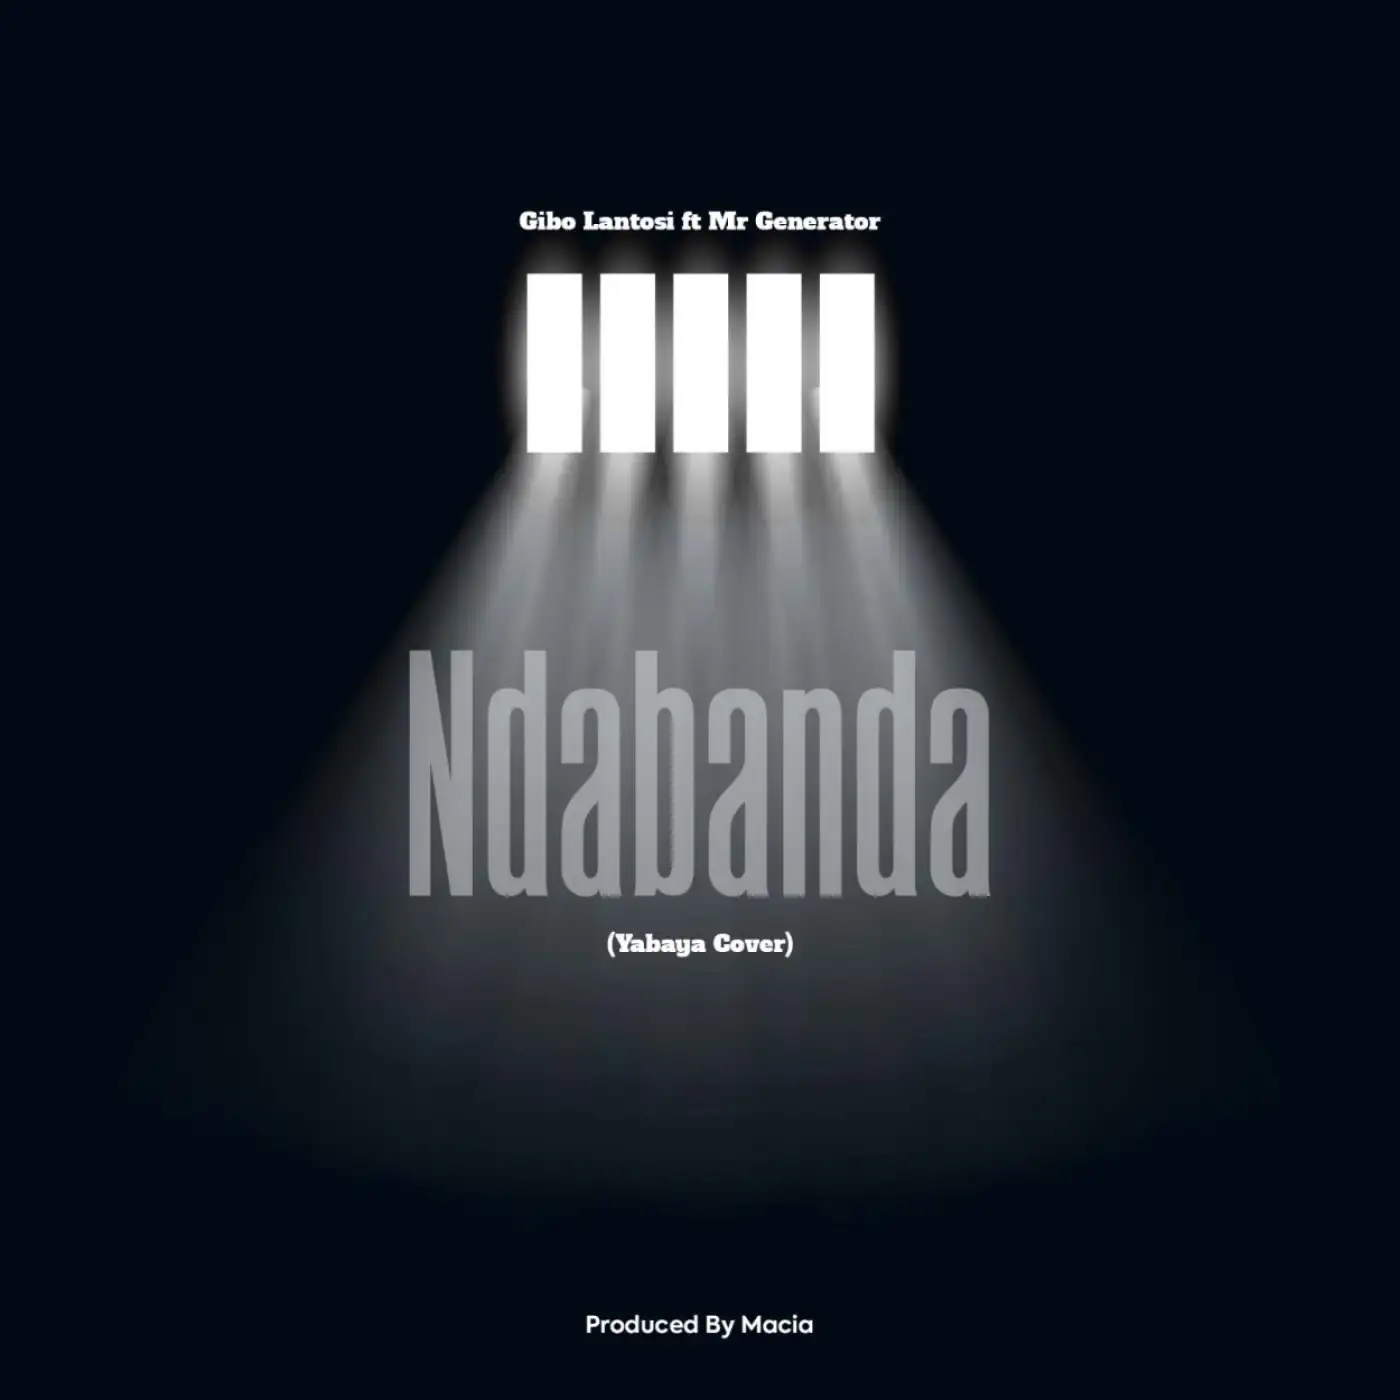 Gibo Lantos-Gibo Lantos - Ndabanda (Yabaya Cover) & Mr Generator (Prod. Macia)-song artwork cover